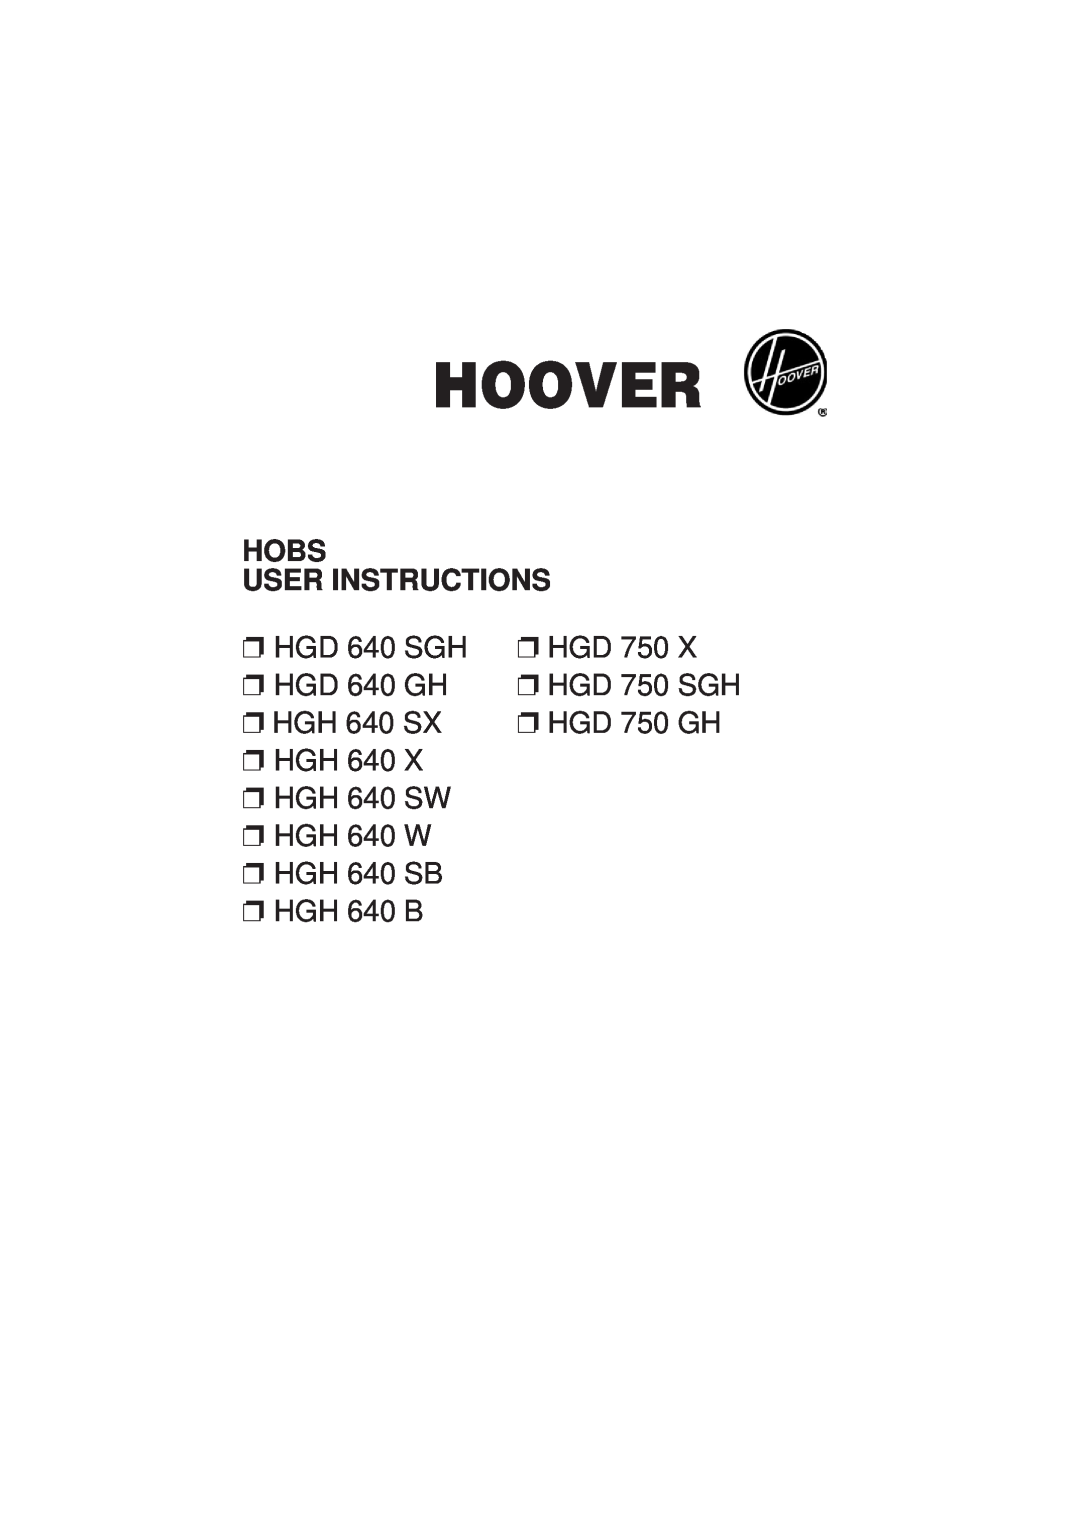 Hoover manual Hoover, Hobs User Instructions, HGD 640 SGH HGD 640 GH HGH 640 SX HGH, HGD 750 HGD 750 SGH HGD 750 GH 